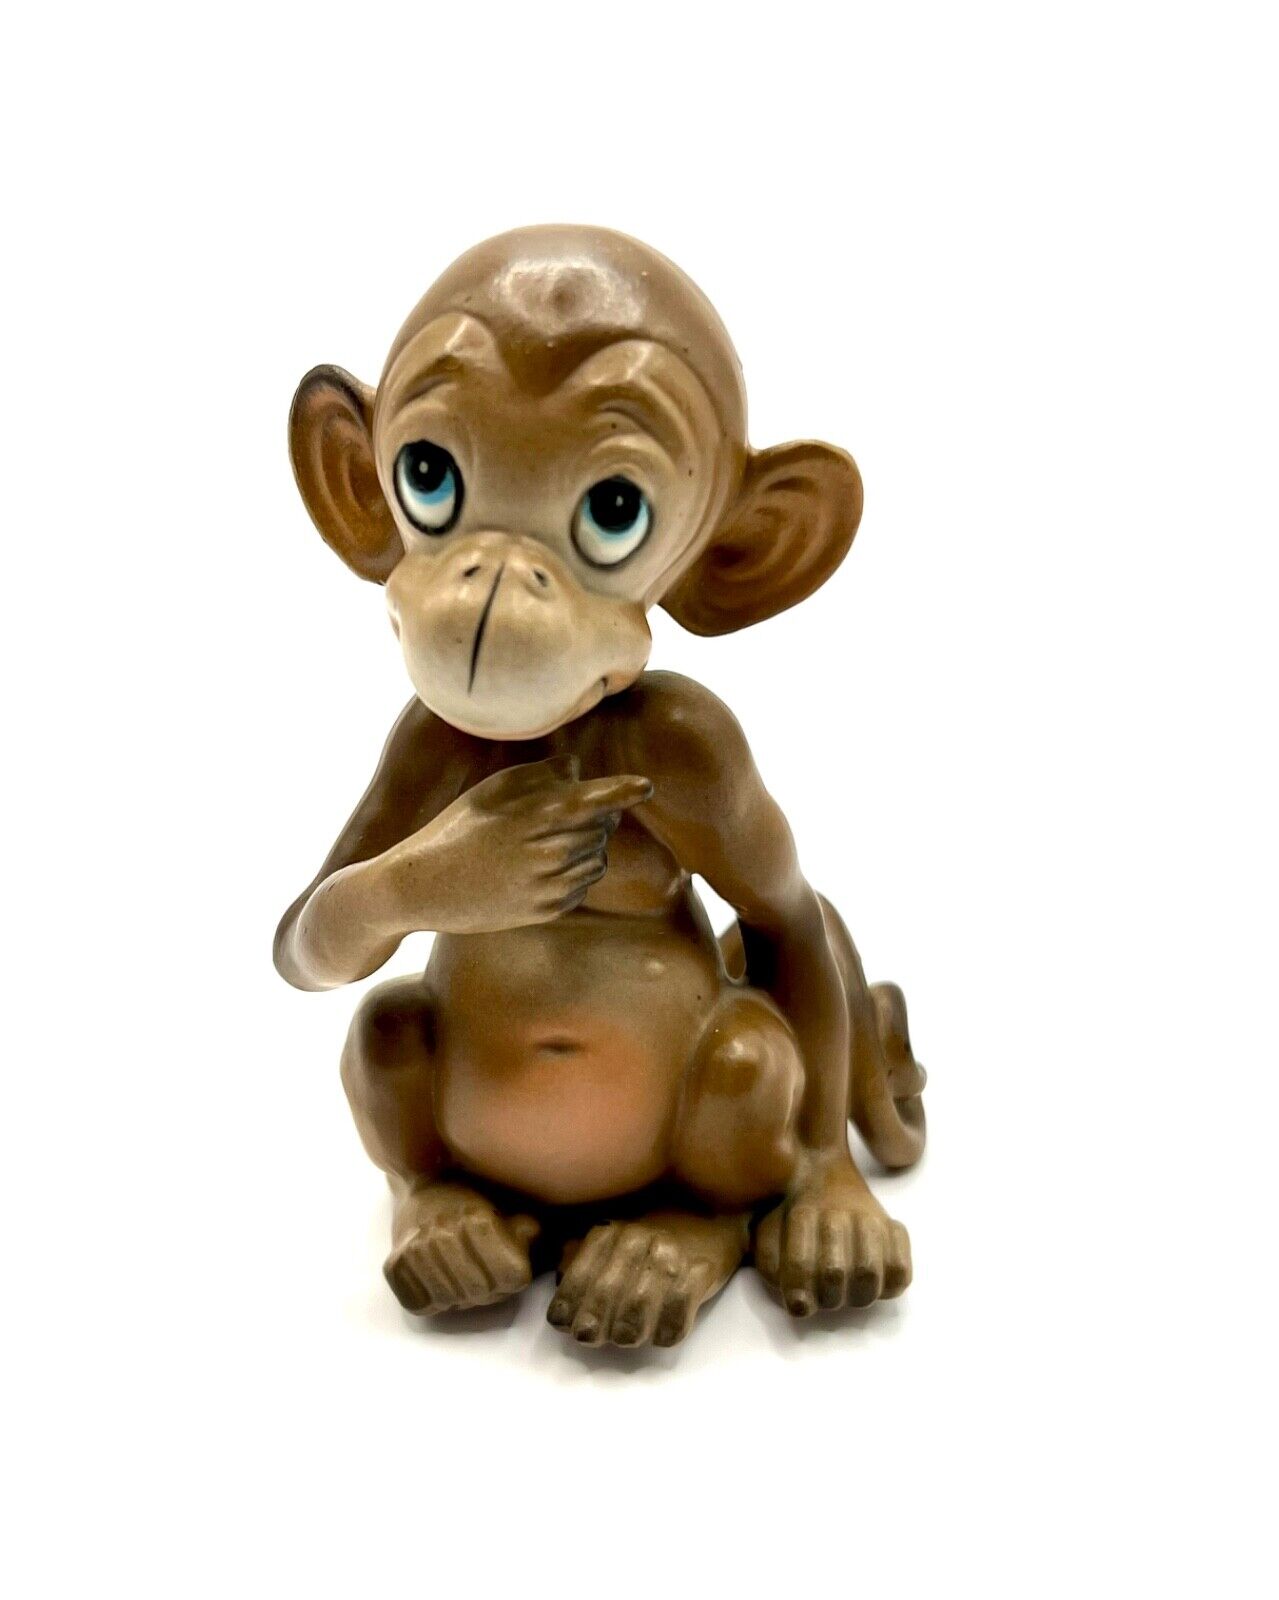 Rare Vintage Josef Originals Ceramic Monkey Figurine